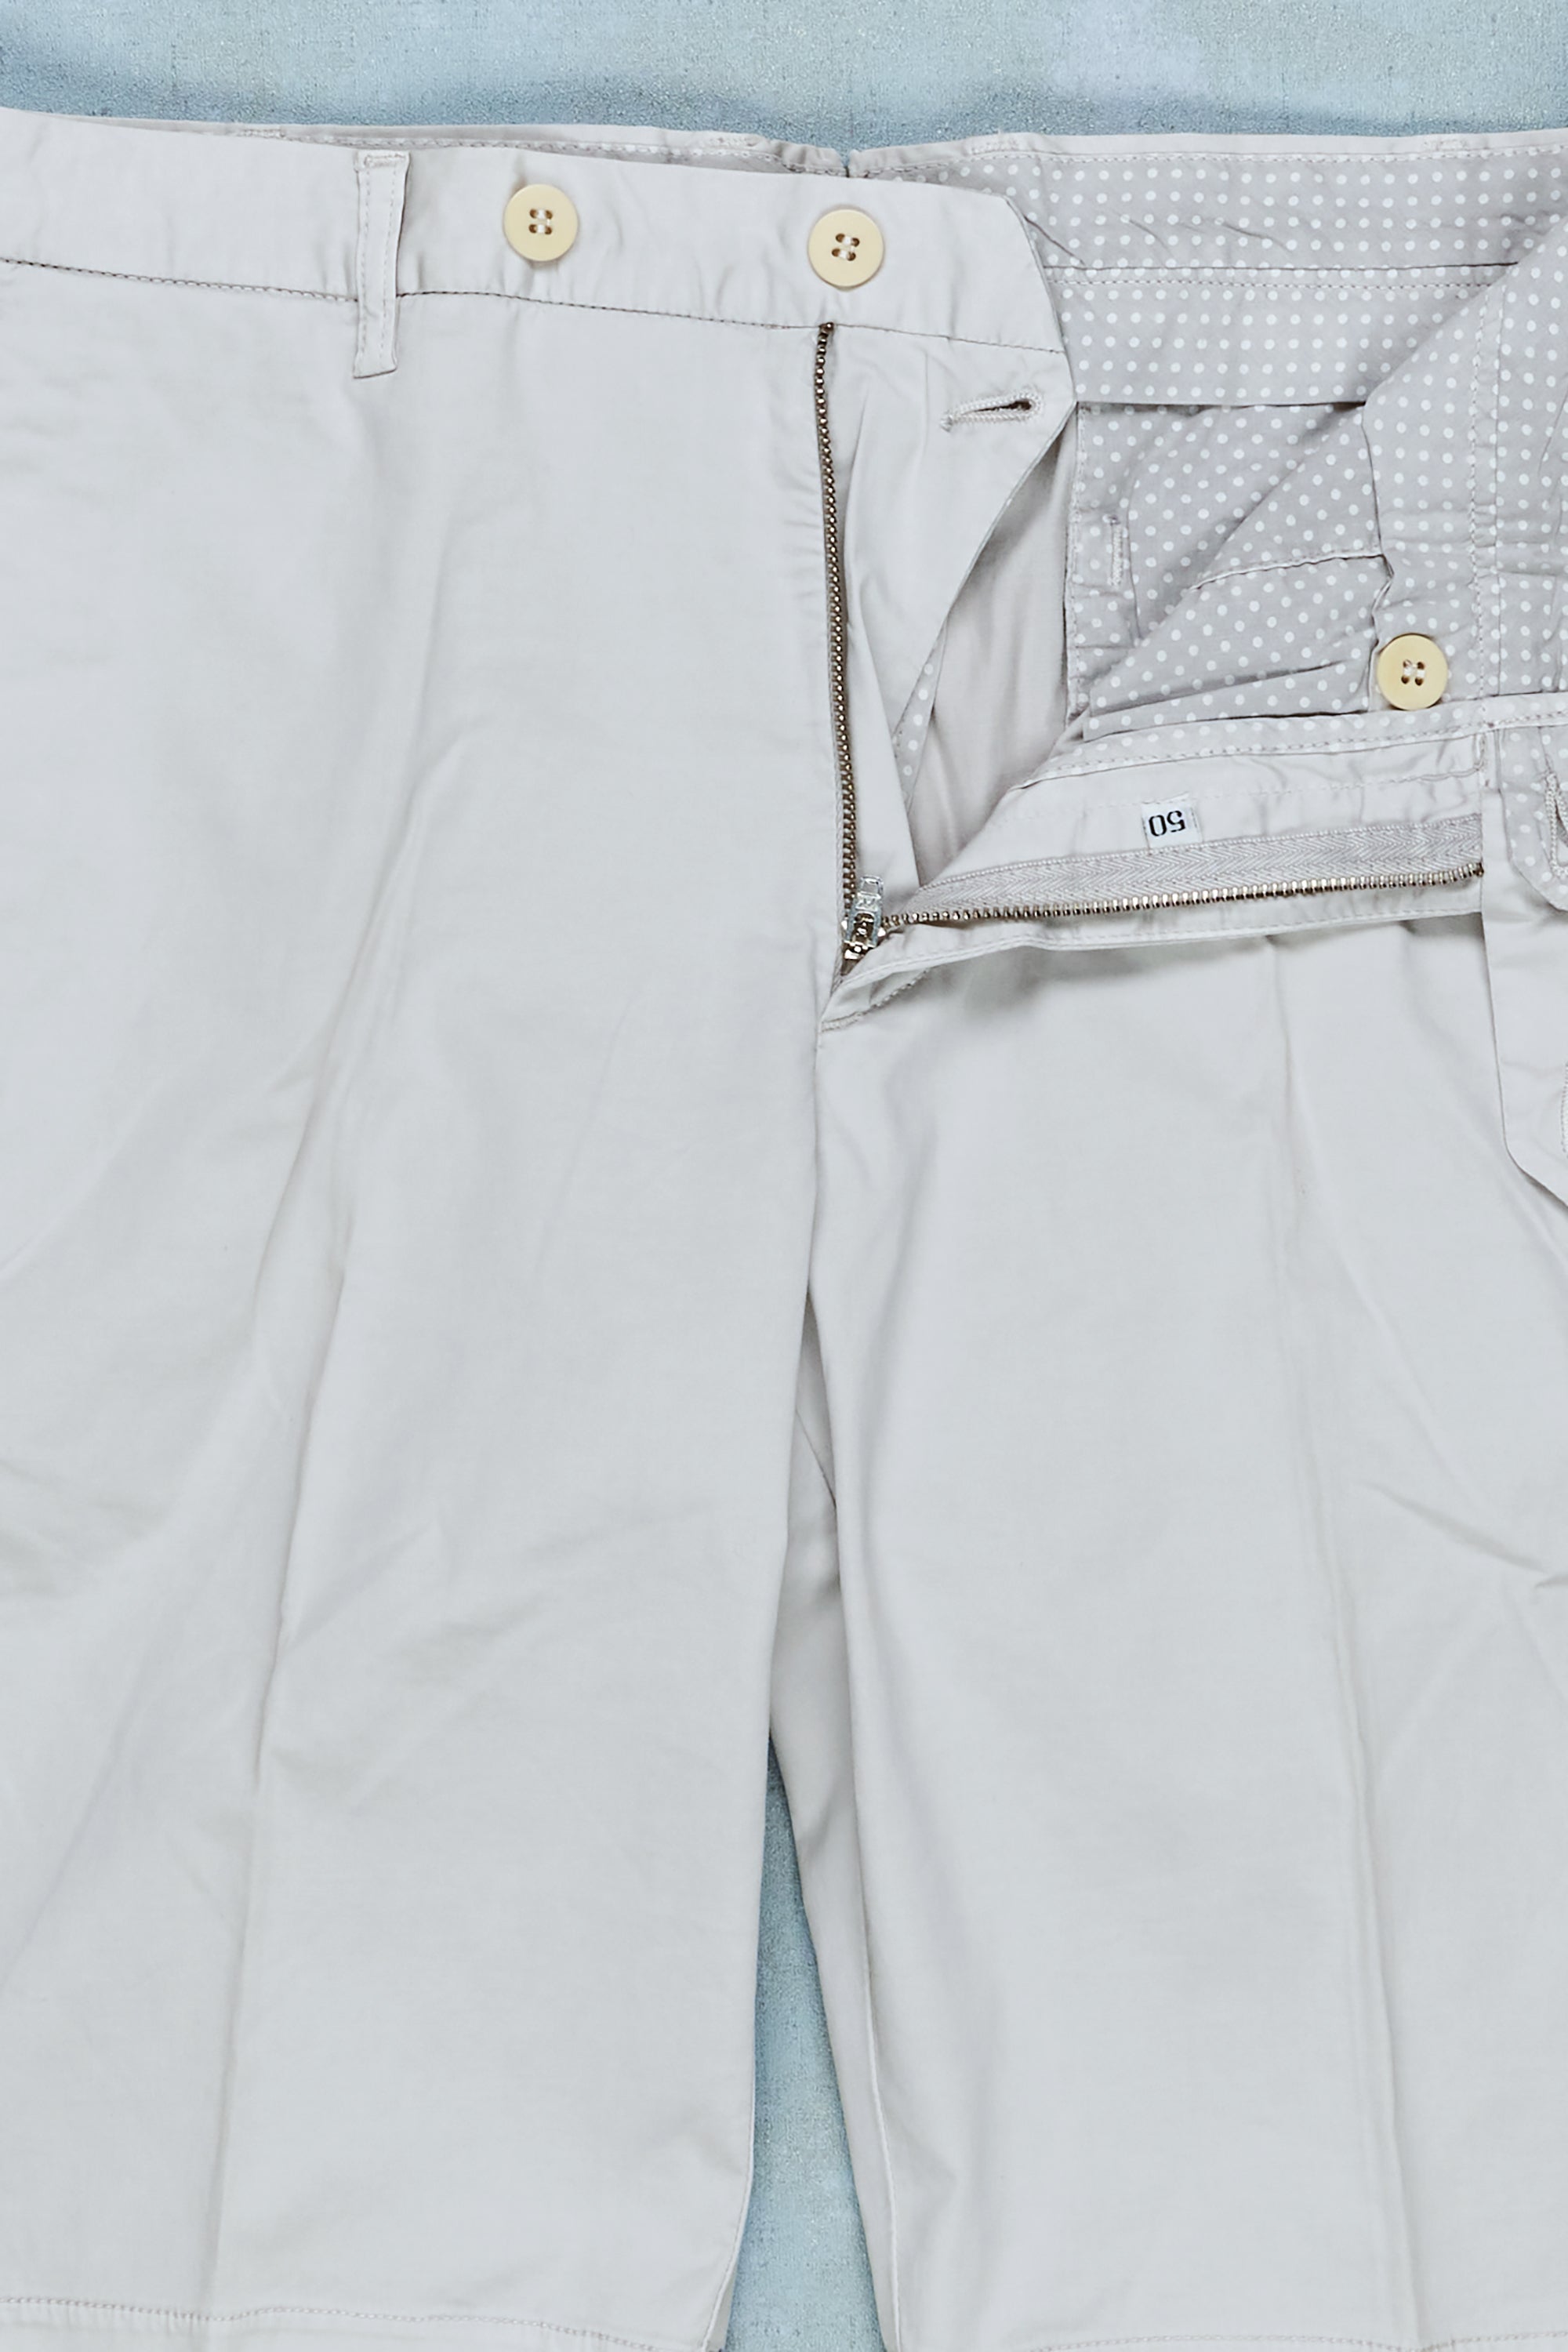 Rota	BE290/2 Light Grey Cotton Shorts